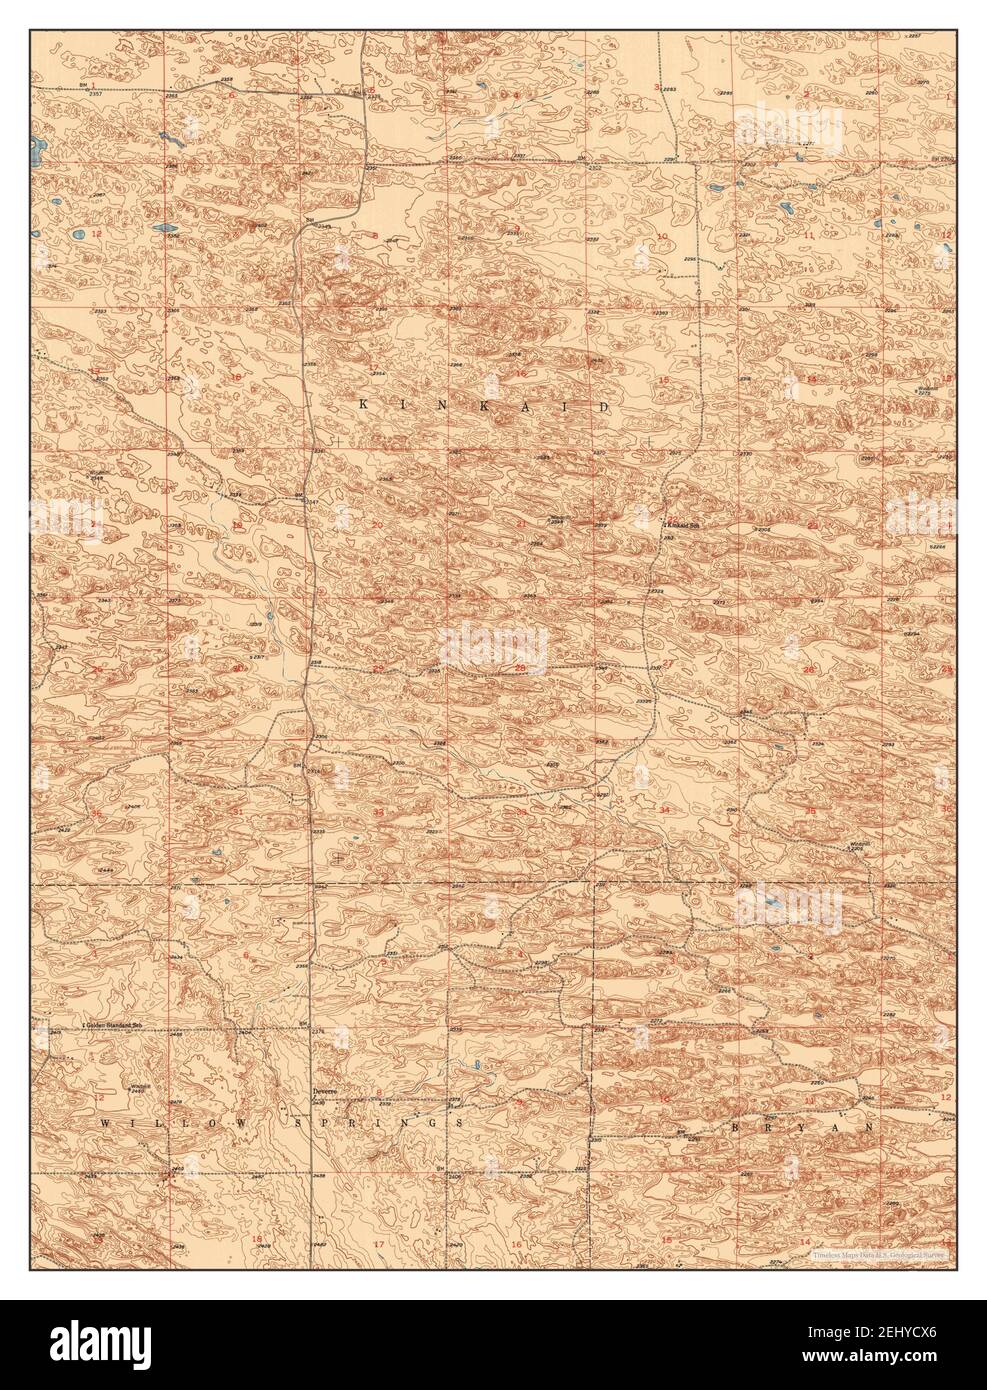 Burwell NE, Nebraska, map 1952, 1:24000, United States of America by Timeless Maps, data U.S. Geological Survey Stock Photo